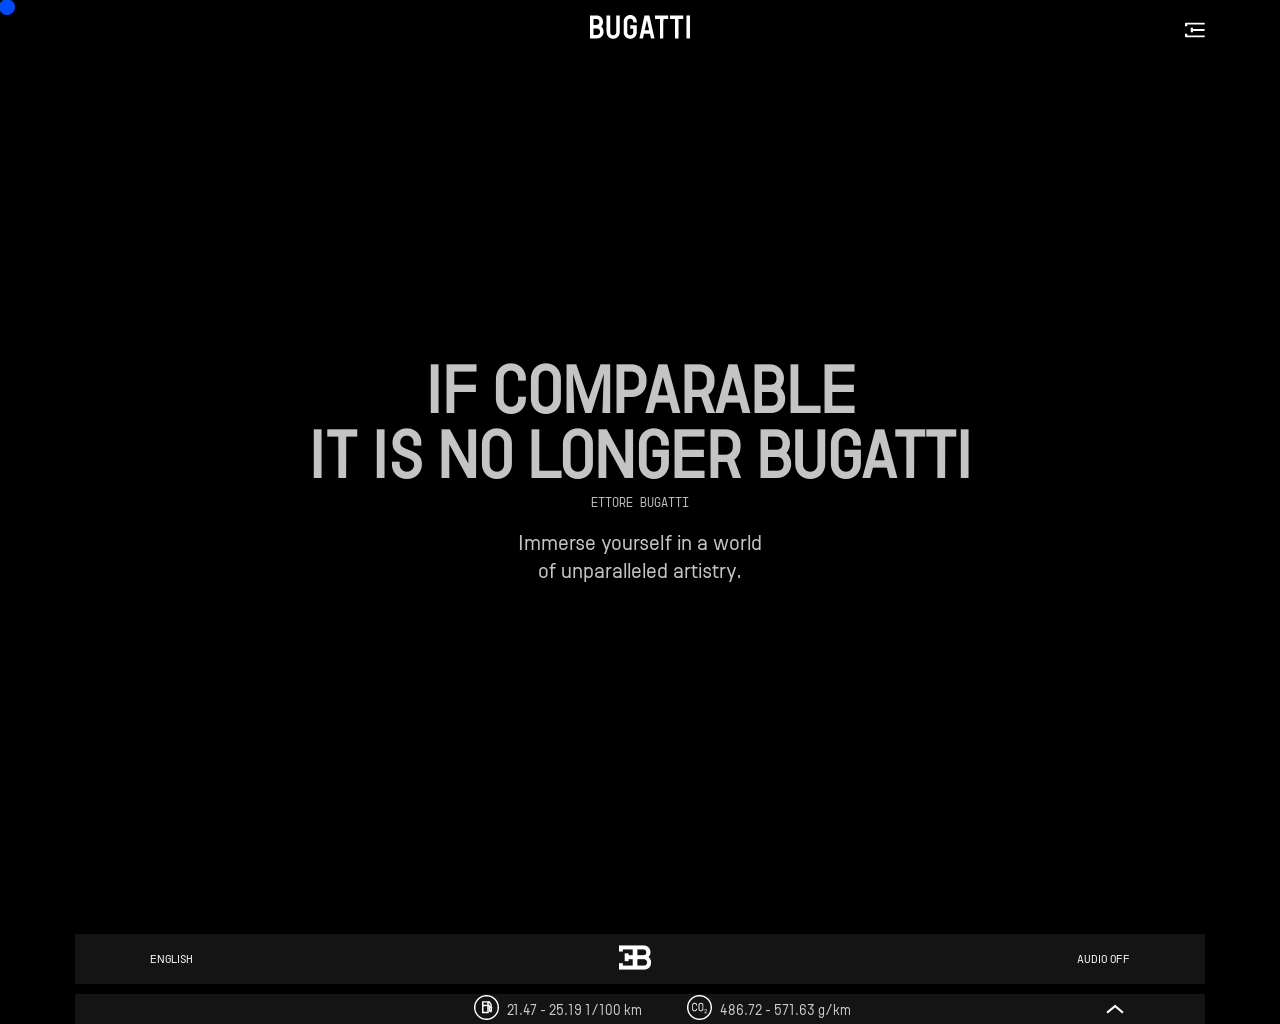 www.bugatti.com